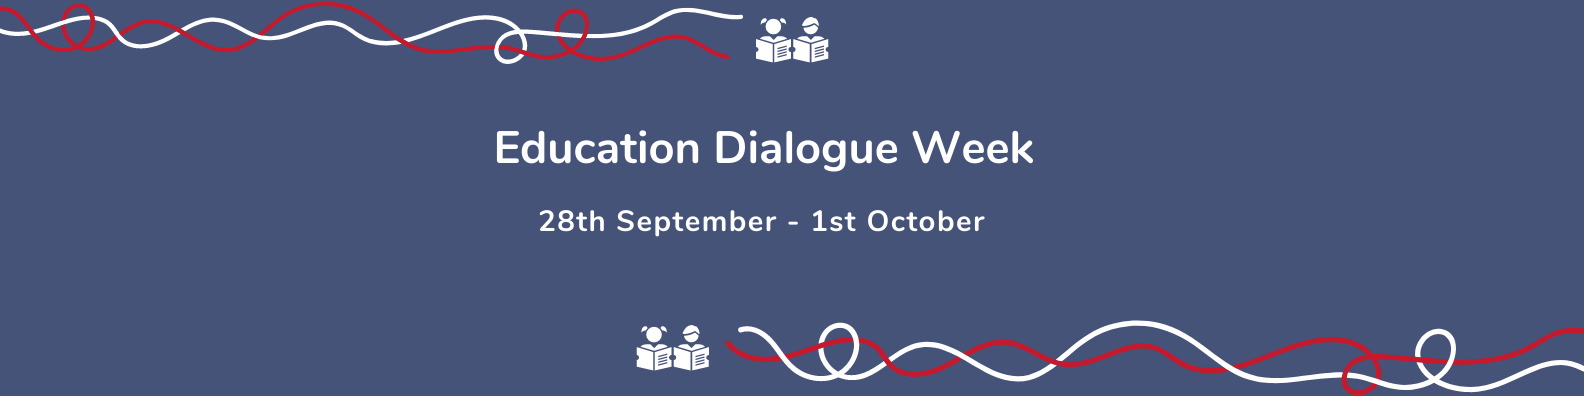 Education Dialogue
Week